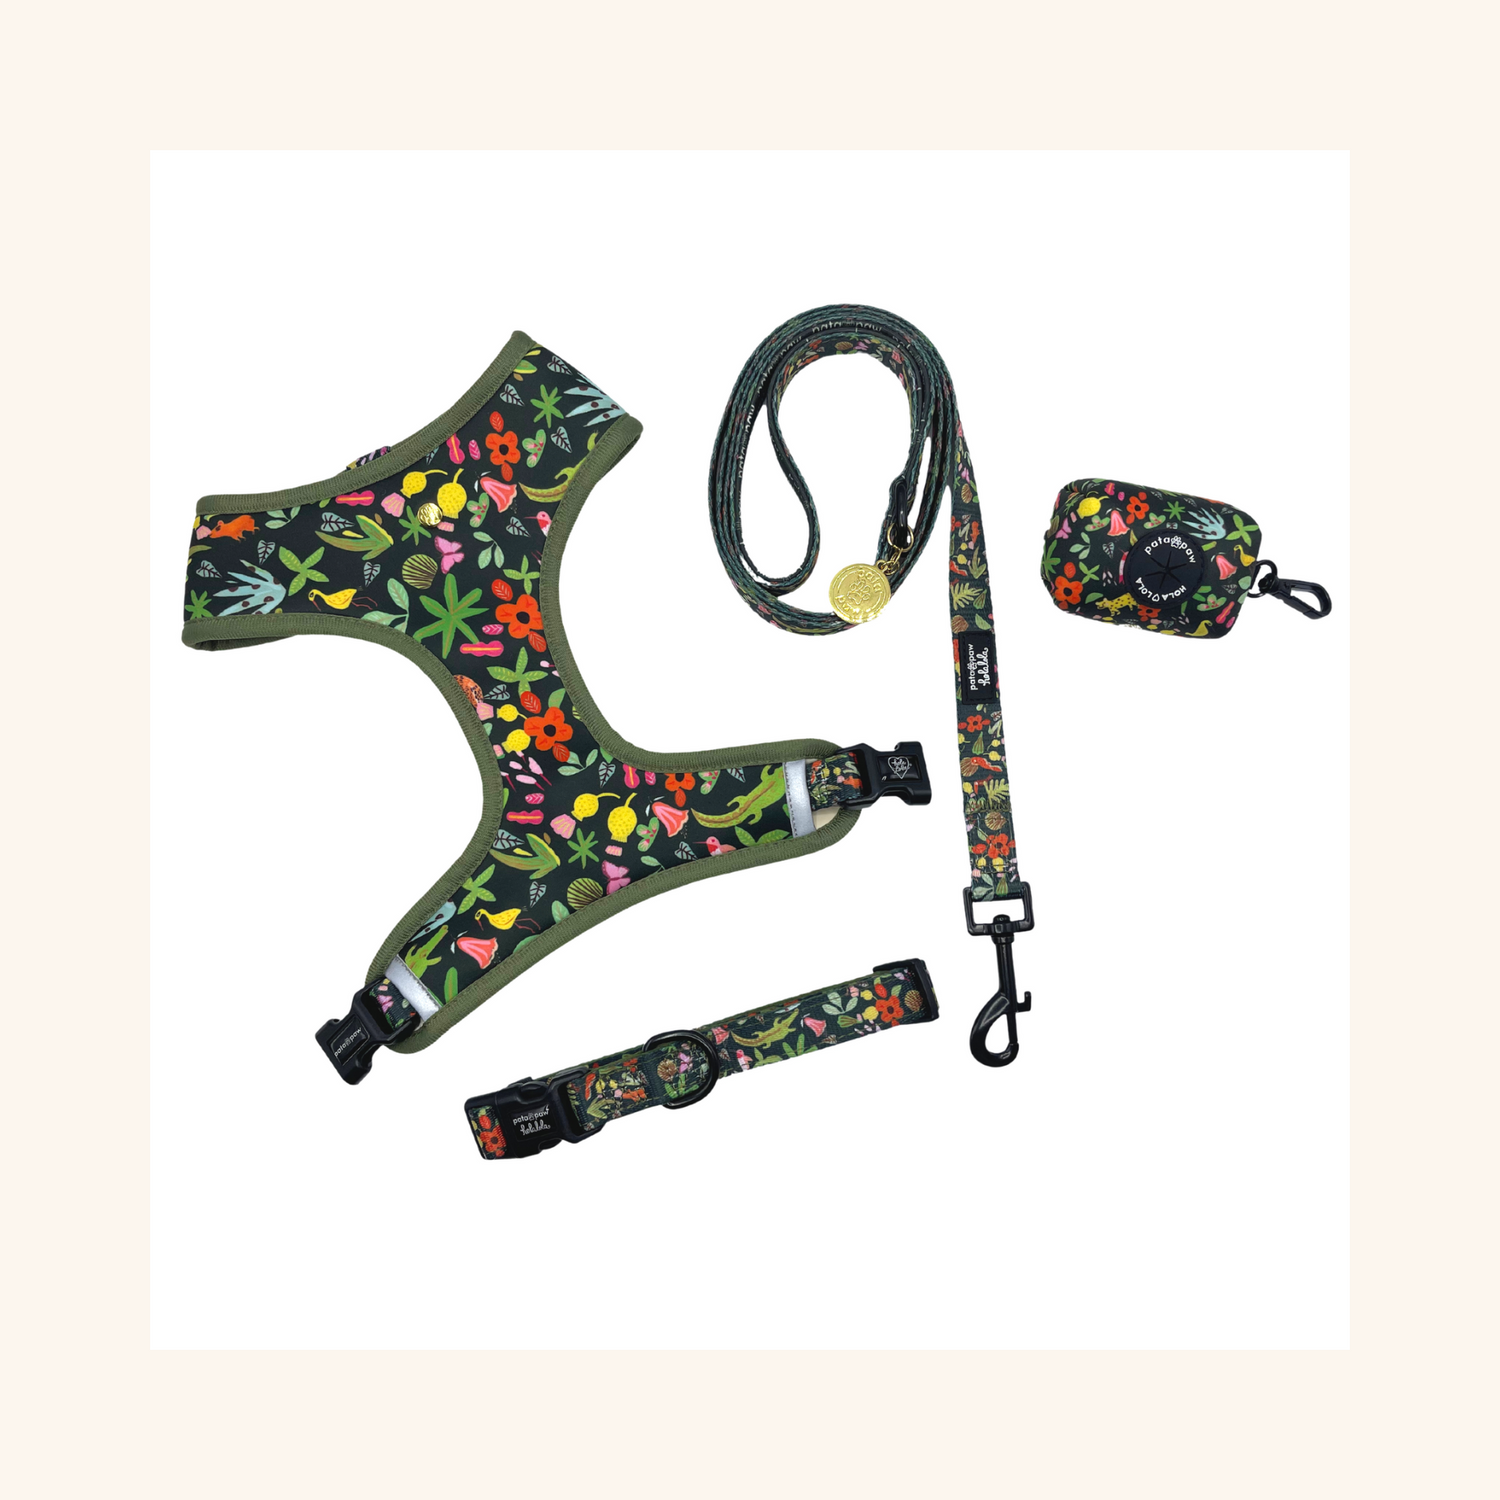 Pata Paw x Holalola selva walking set: reversible harness, leash, collar and poop bag carrier